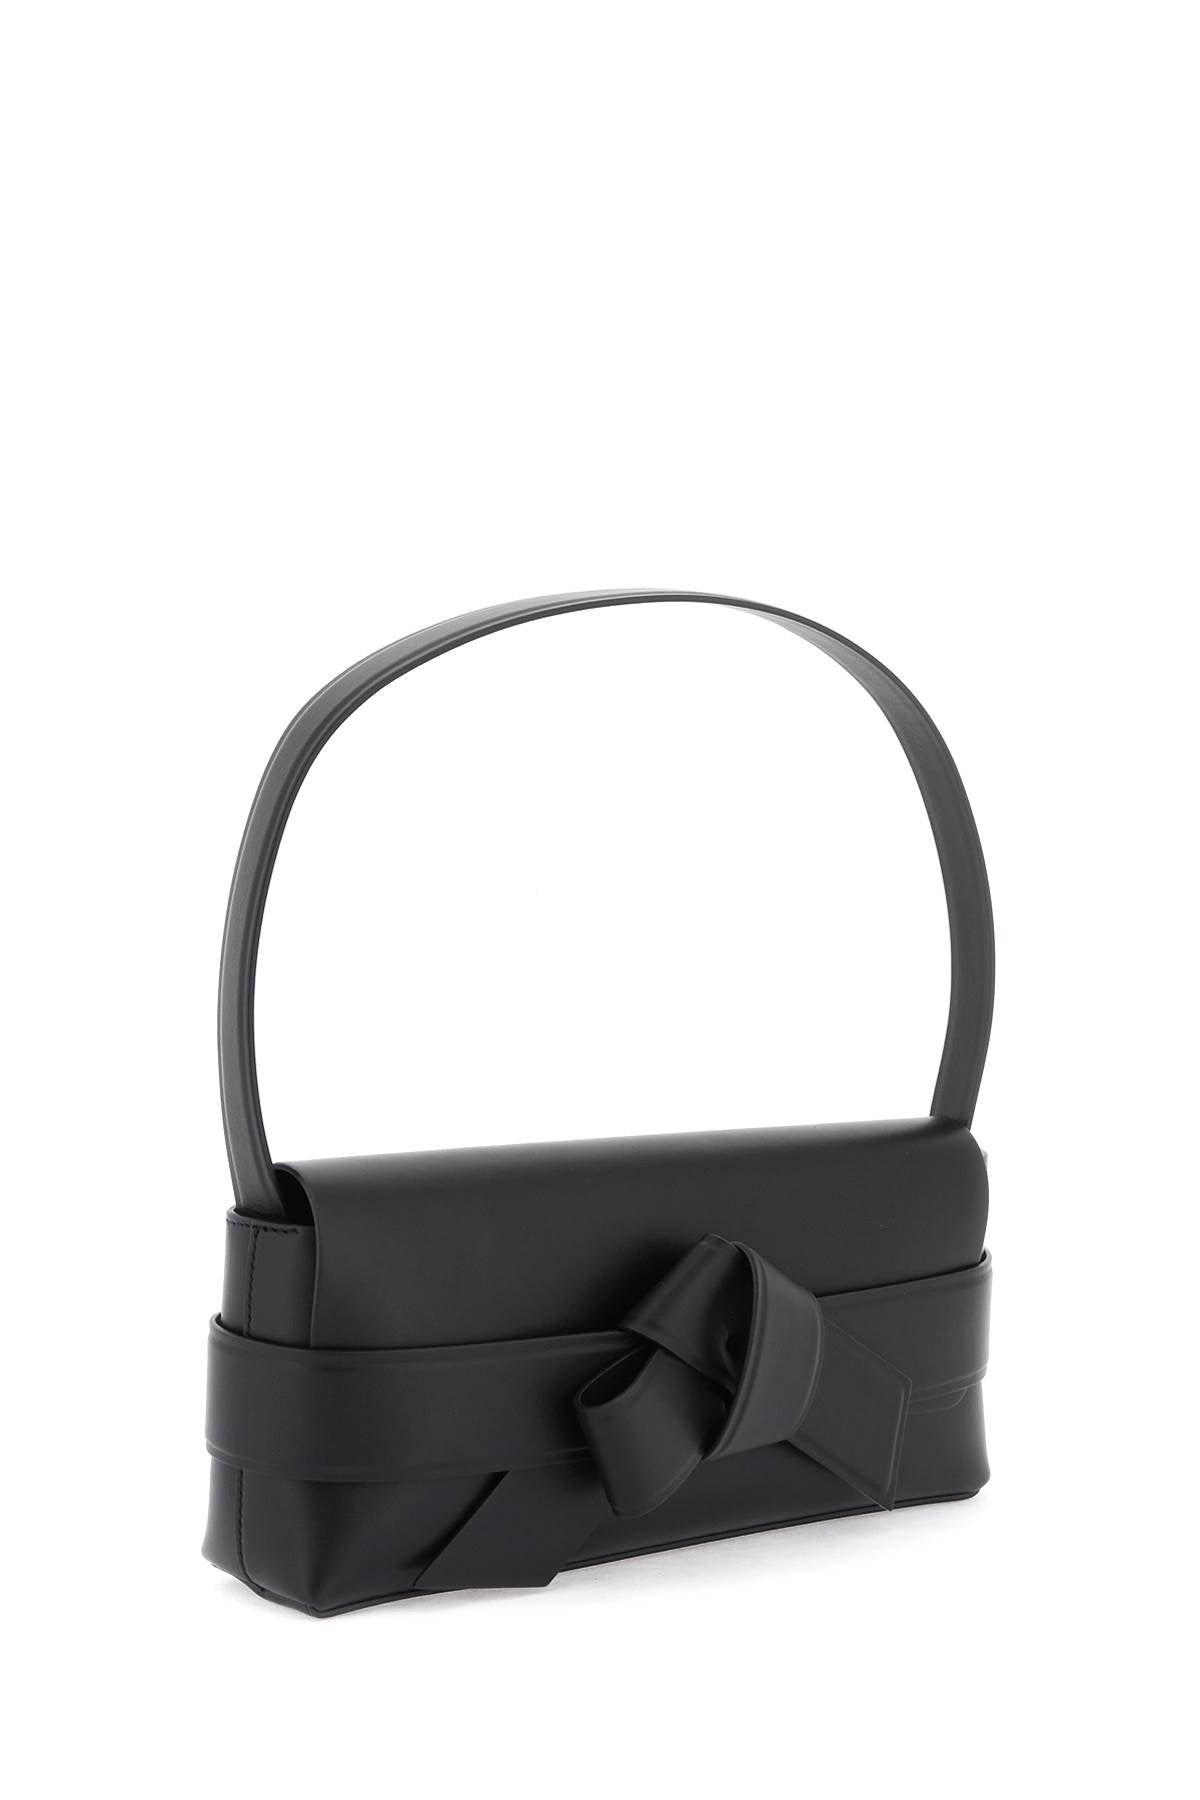 ACNE STUDIOS Sleek and Elongated Smooth Leather Shoulder Bag with Adjustable Handle